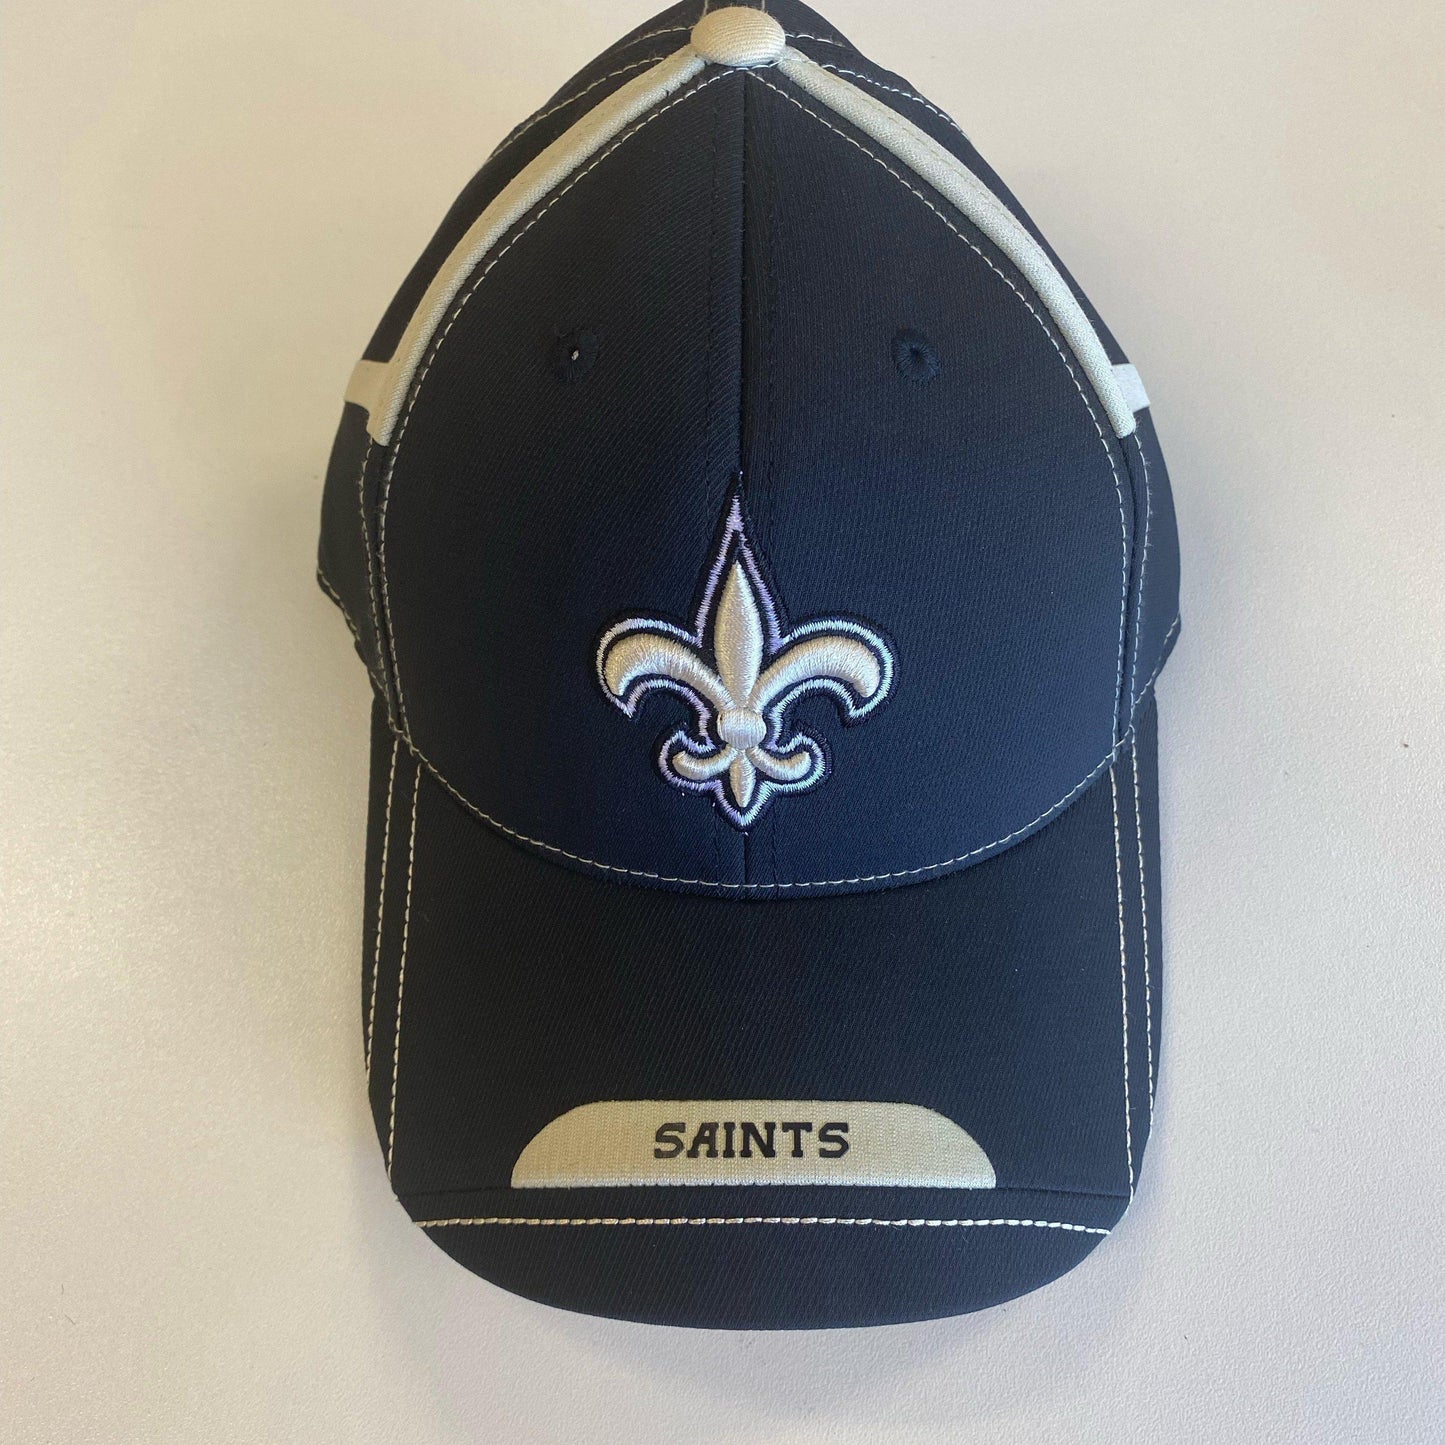 Saints Youth Hat